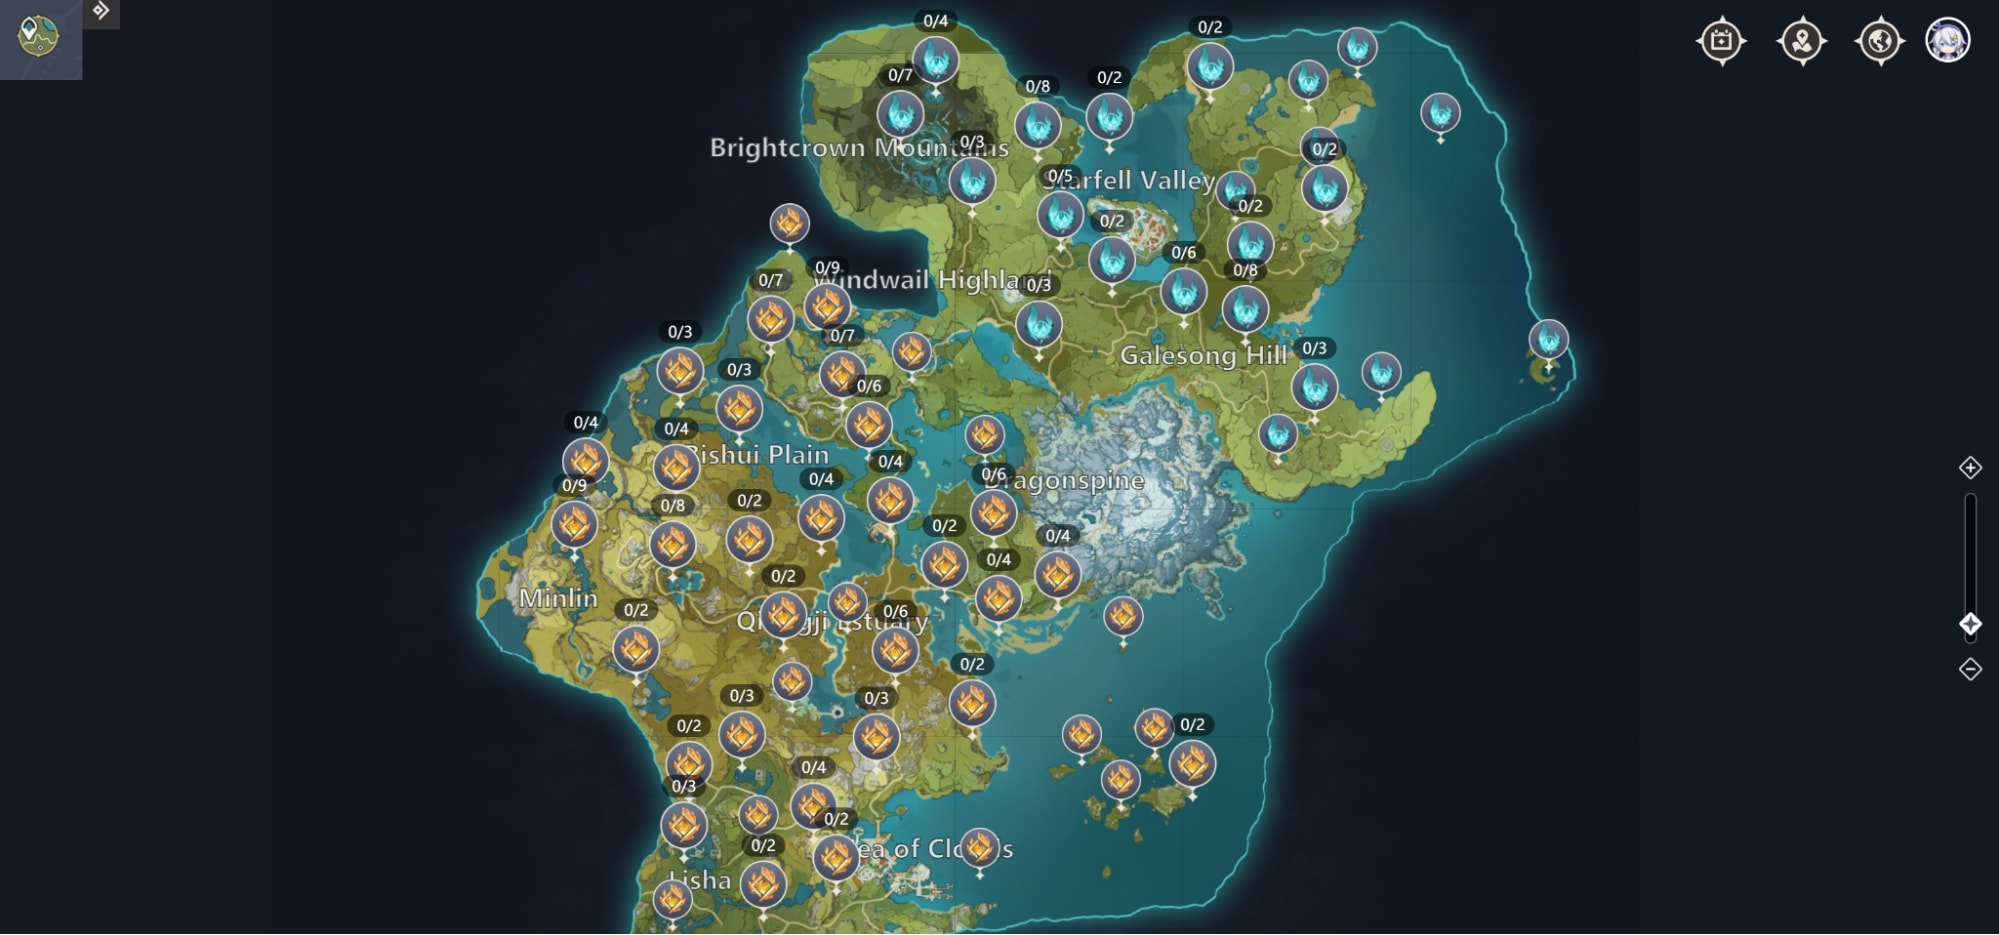 genshin impact tips - official interactive map